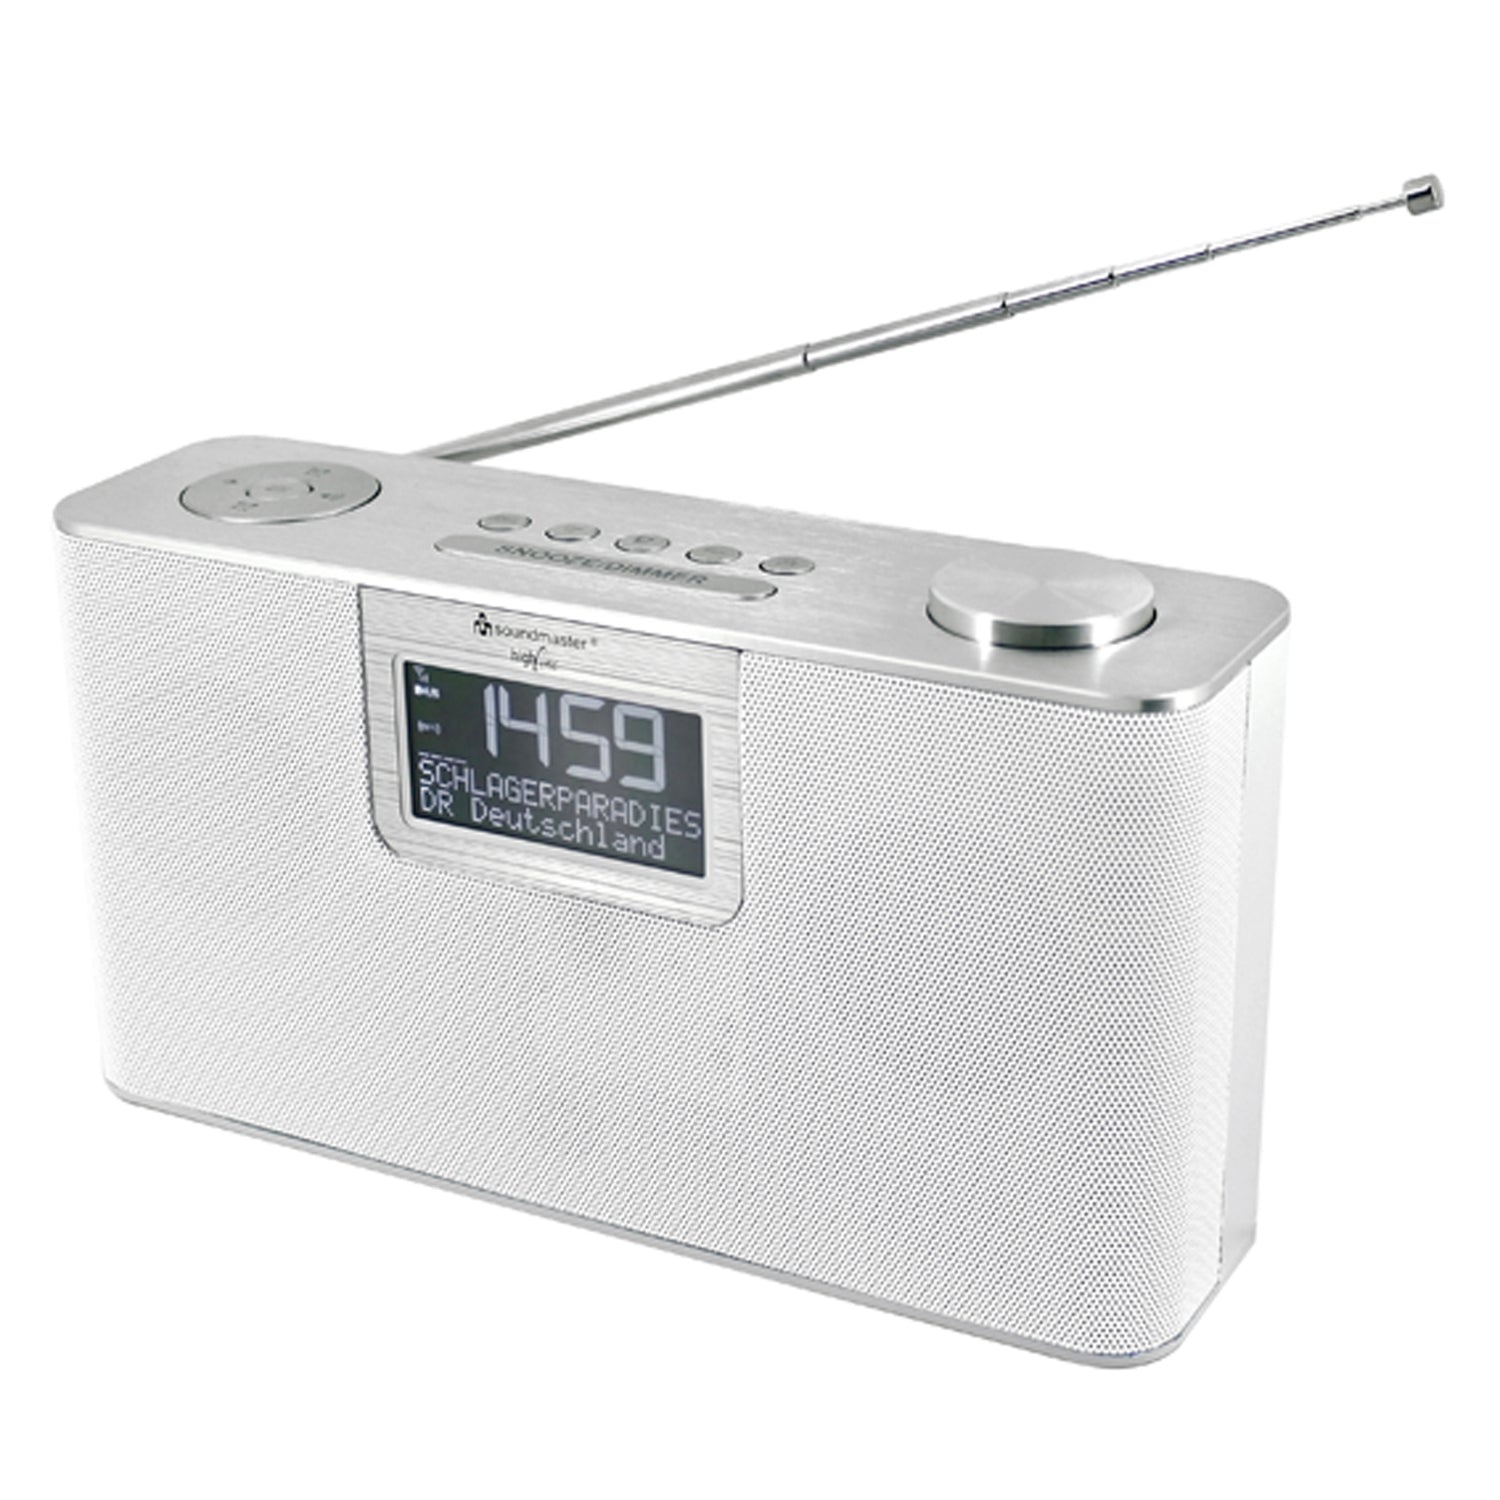 Soundmaster HighLine DAB700WE portable radio Boombox DAB+ FM with USB SD Bluetooth